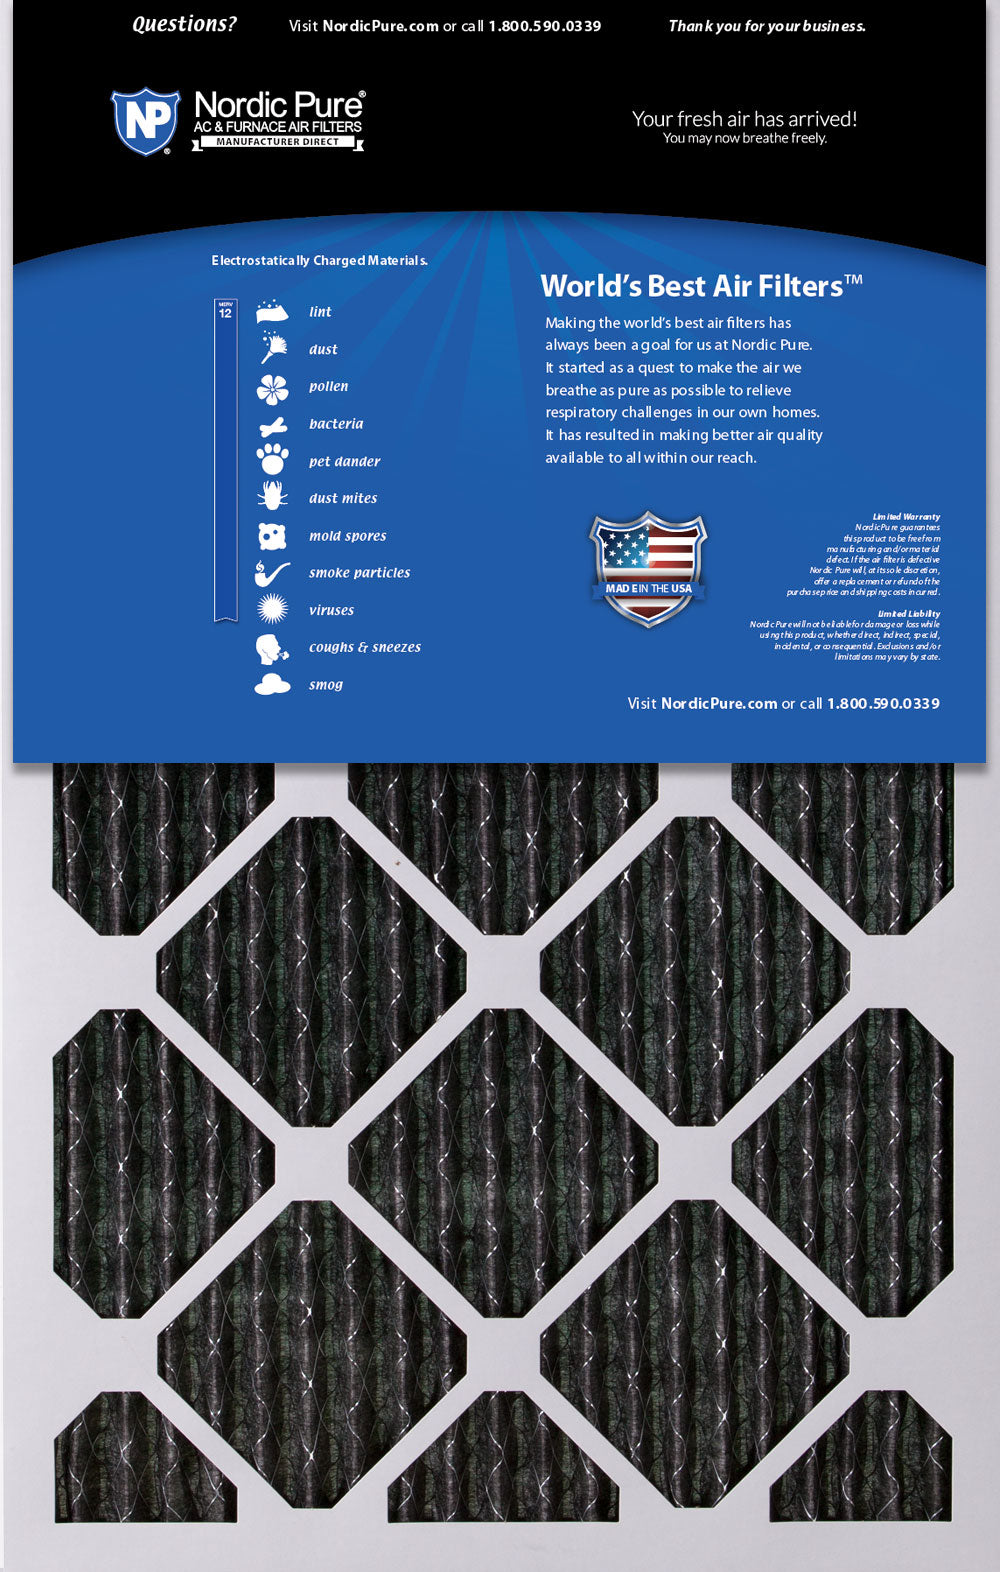 30x36x1 MERV 12 Plus Carbon AC Furnace Filters